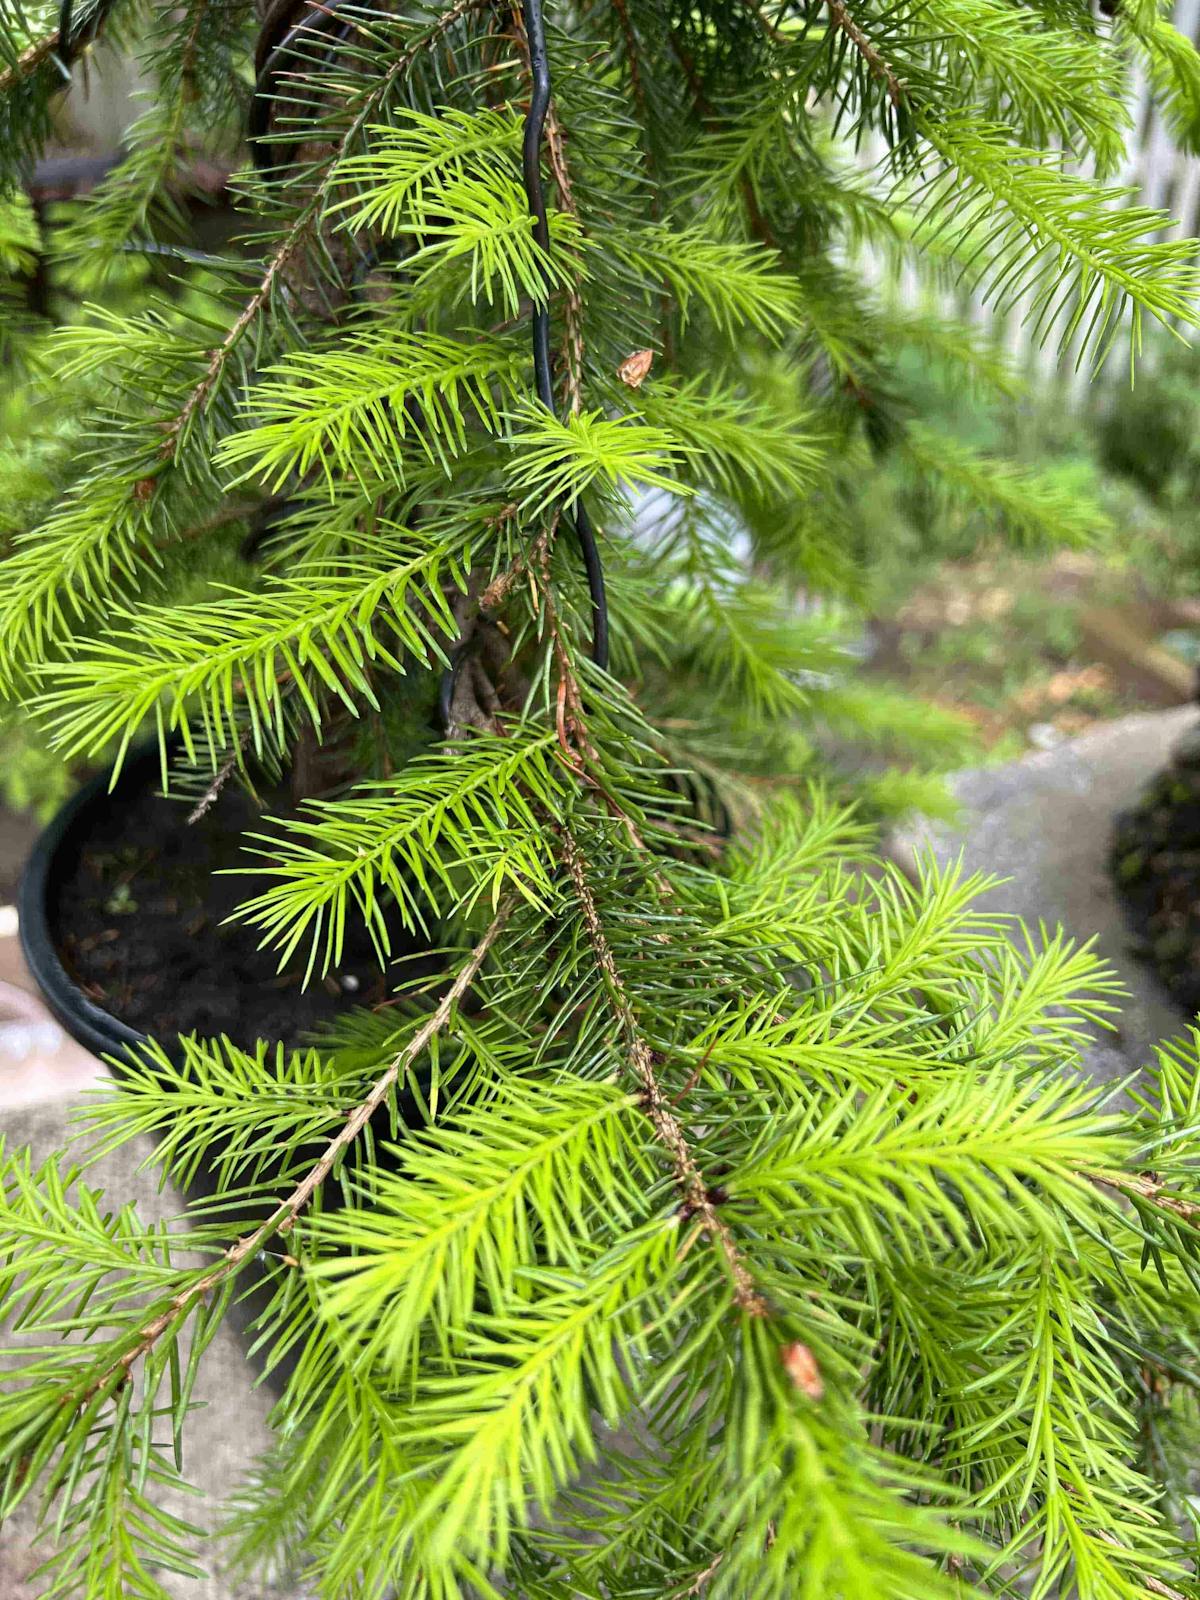 New foliage on a Norway Spruce bonsai